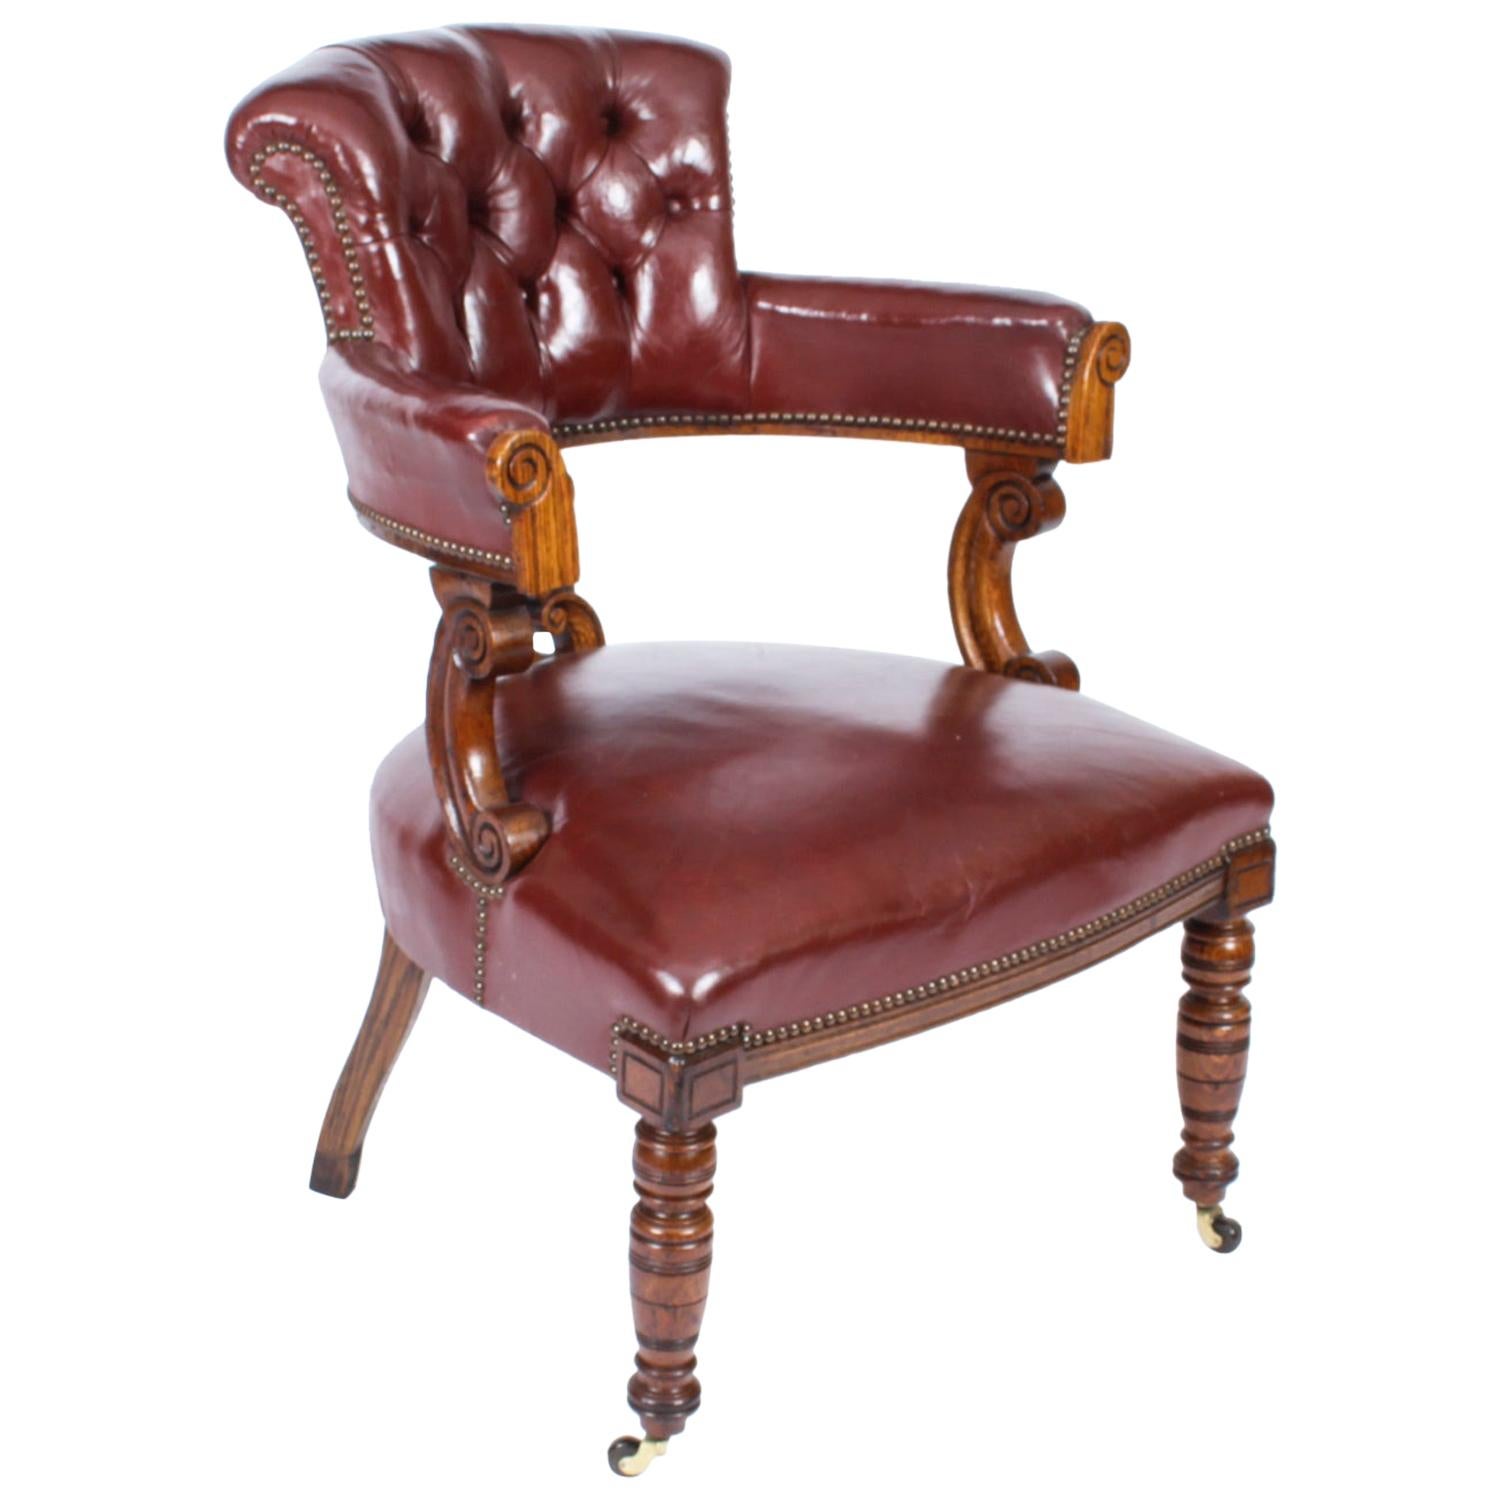 Antique Victorian Oak Leather Desk Chair Tub Chair 19th Century